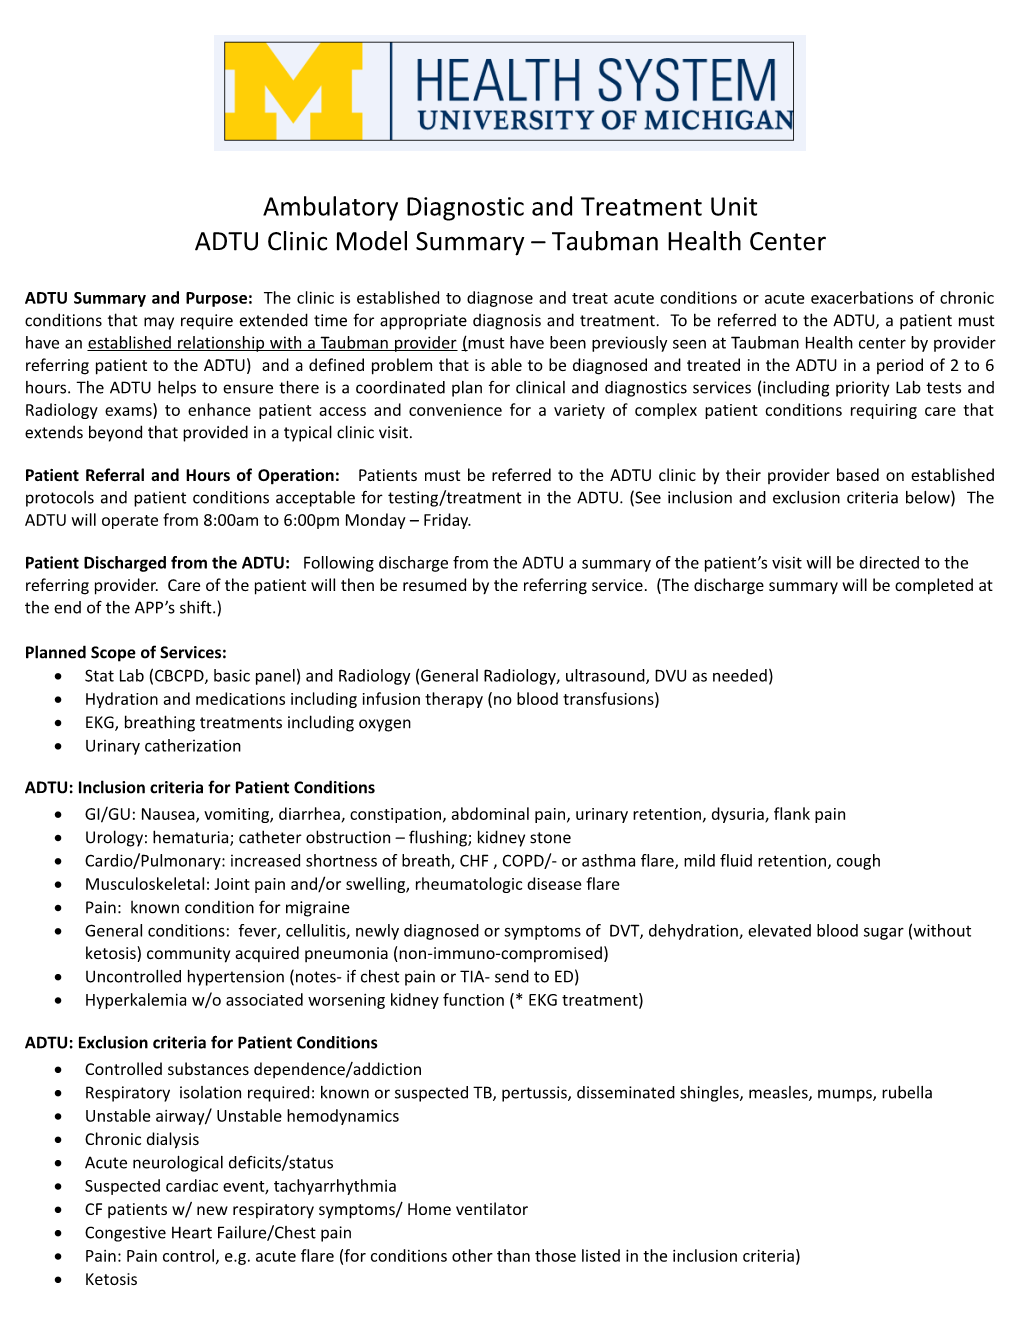 ADTU Clinic Model Summary Taubman Health Center